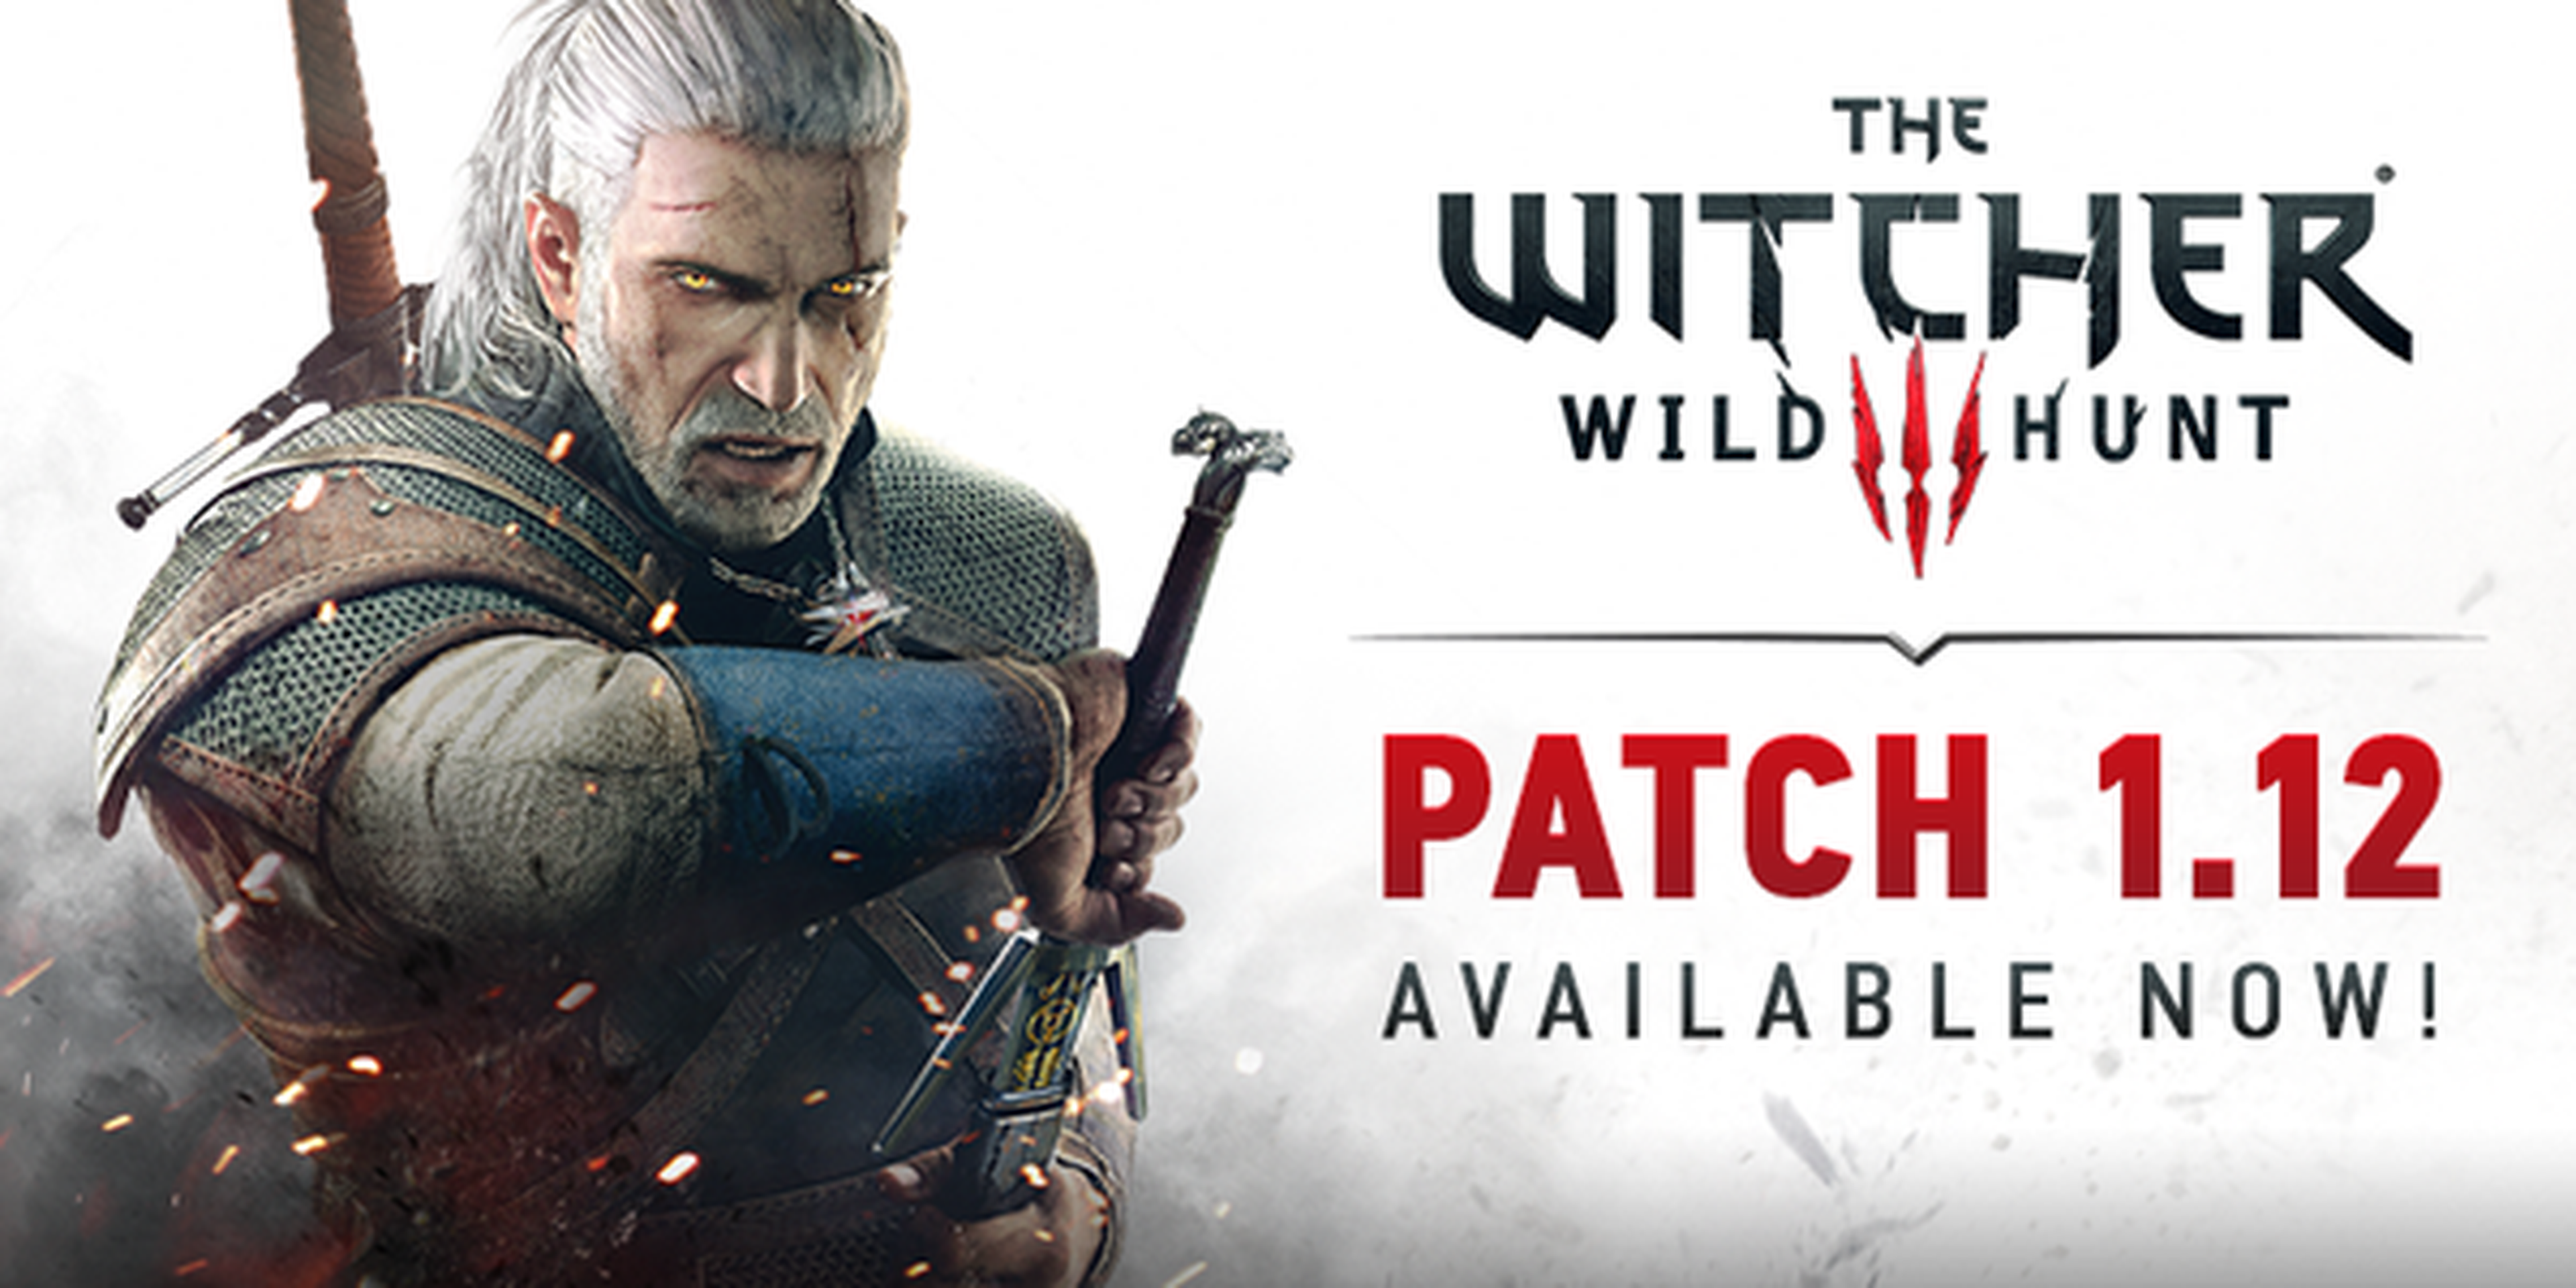 The Witcher 3 Wild Hunt, parche 1.12 ya disponible en PS4, Xbox One y PC